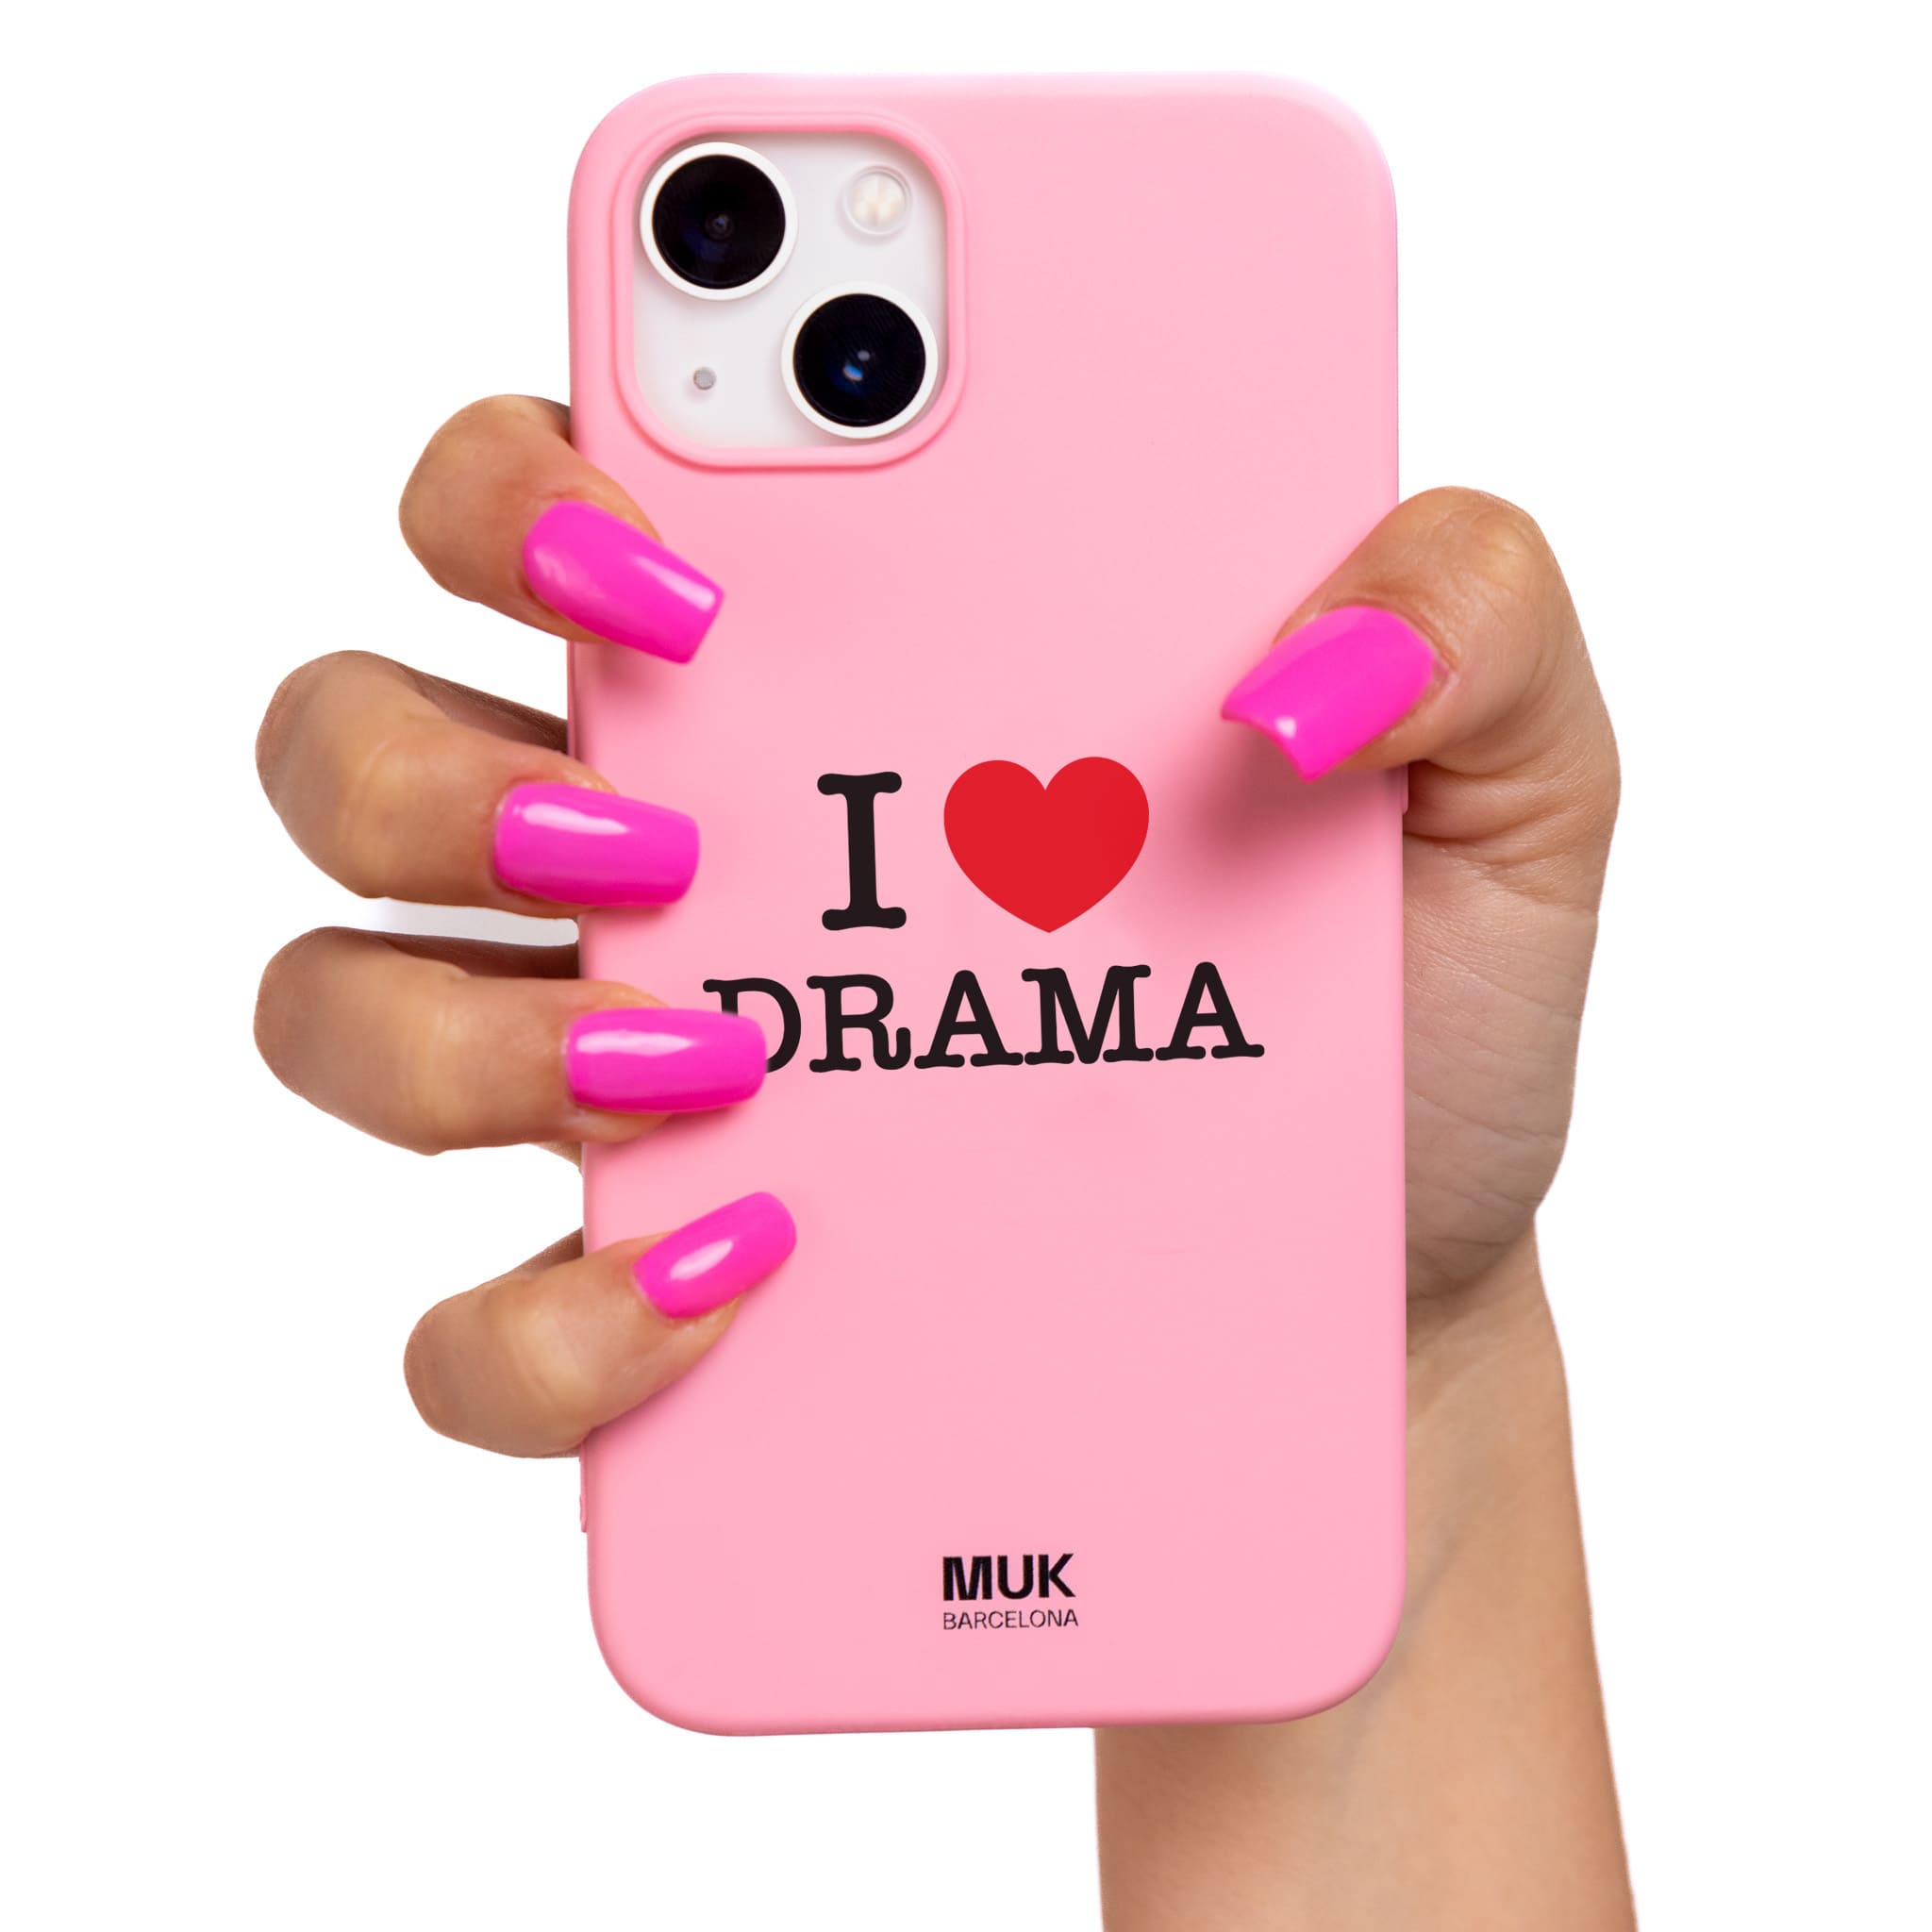 Funda de móvil TPU rosa con frase personalizada "I LOVE ..."
